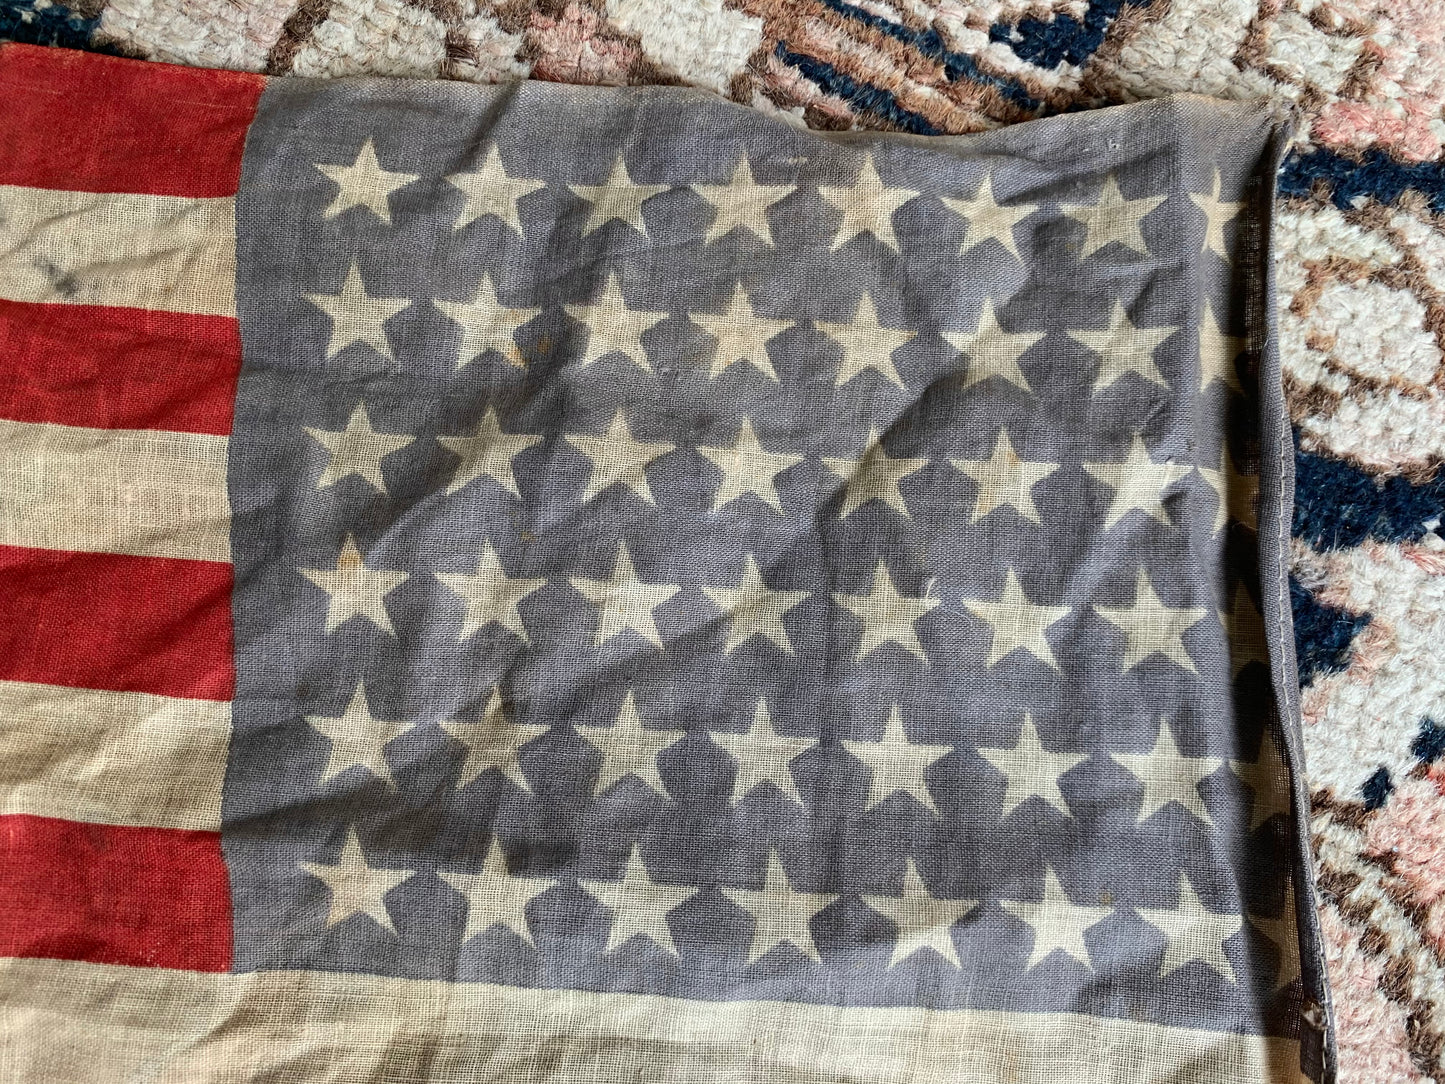 Vintage tattered 48 star mini flag